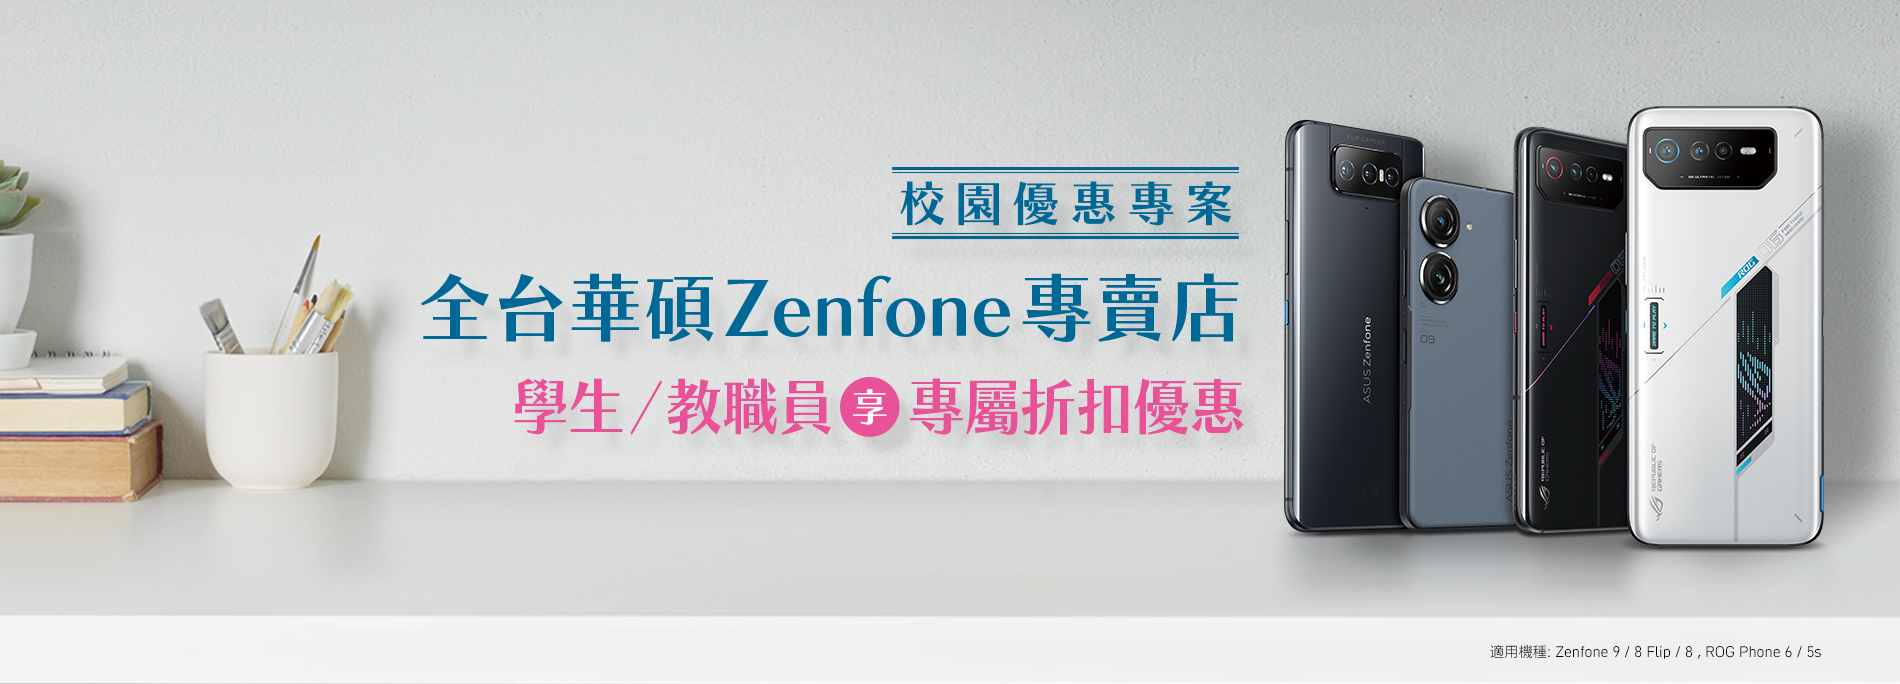 Zenfone / ROG Phone 校園優惠專案－學生／教職員享專屬折扣優惠